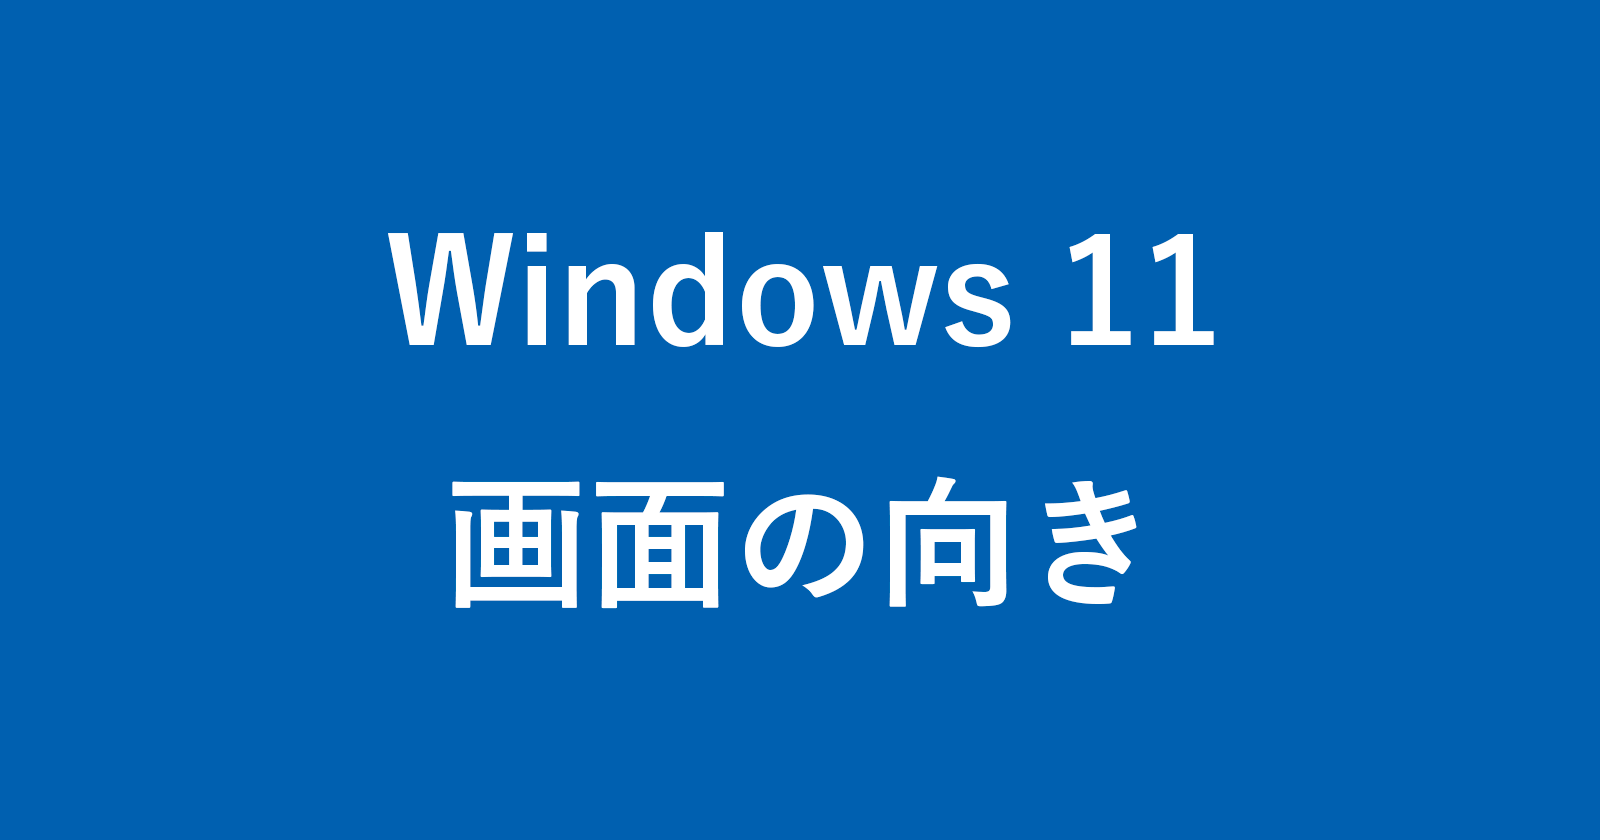 windows 11 display orientation